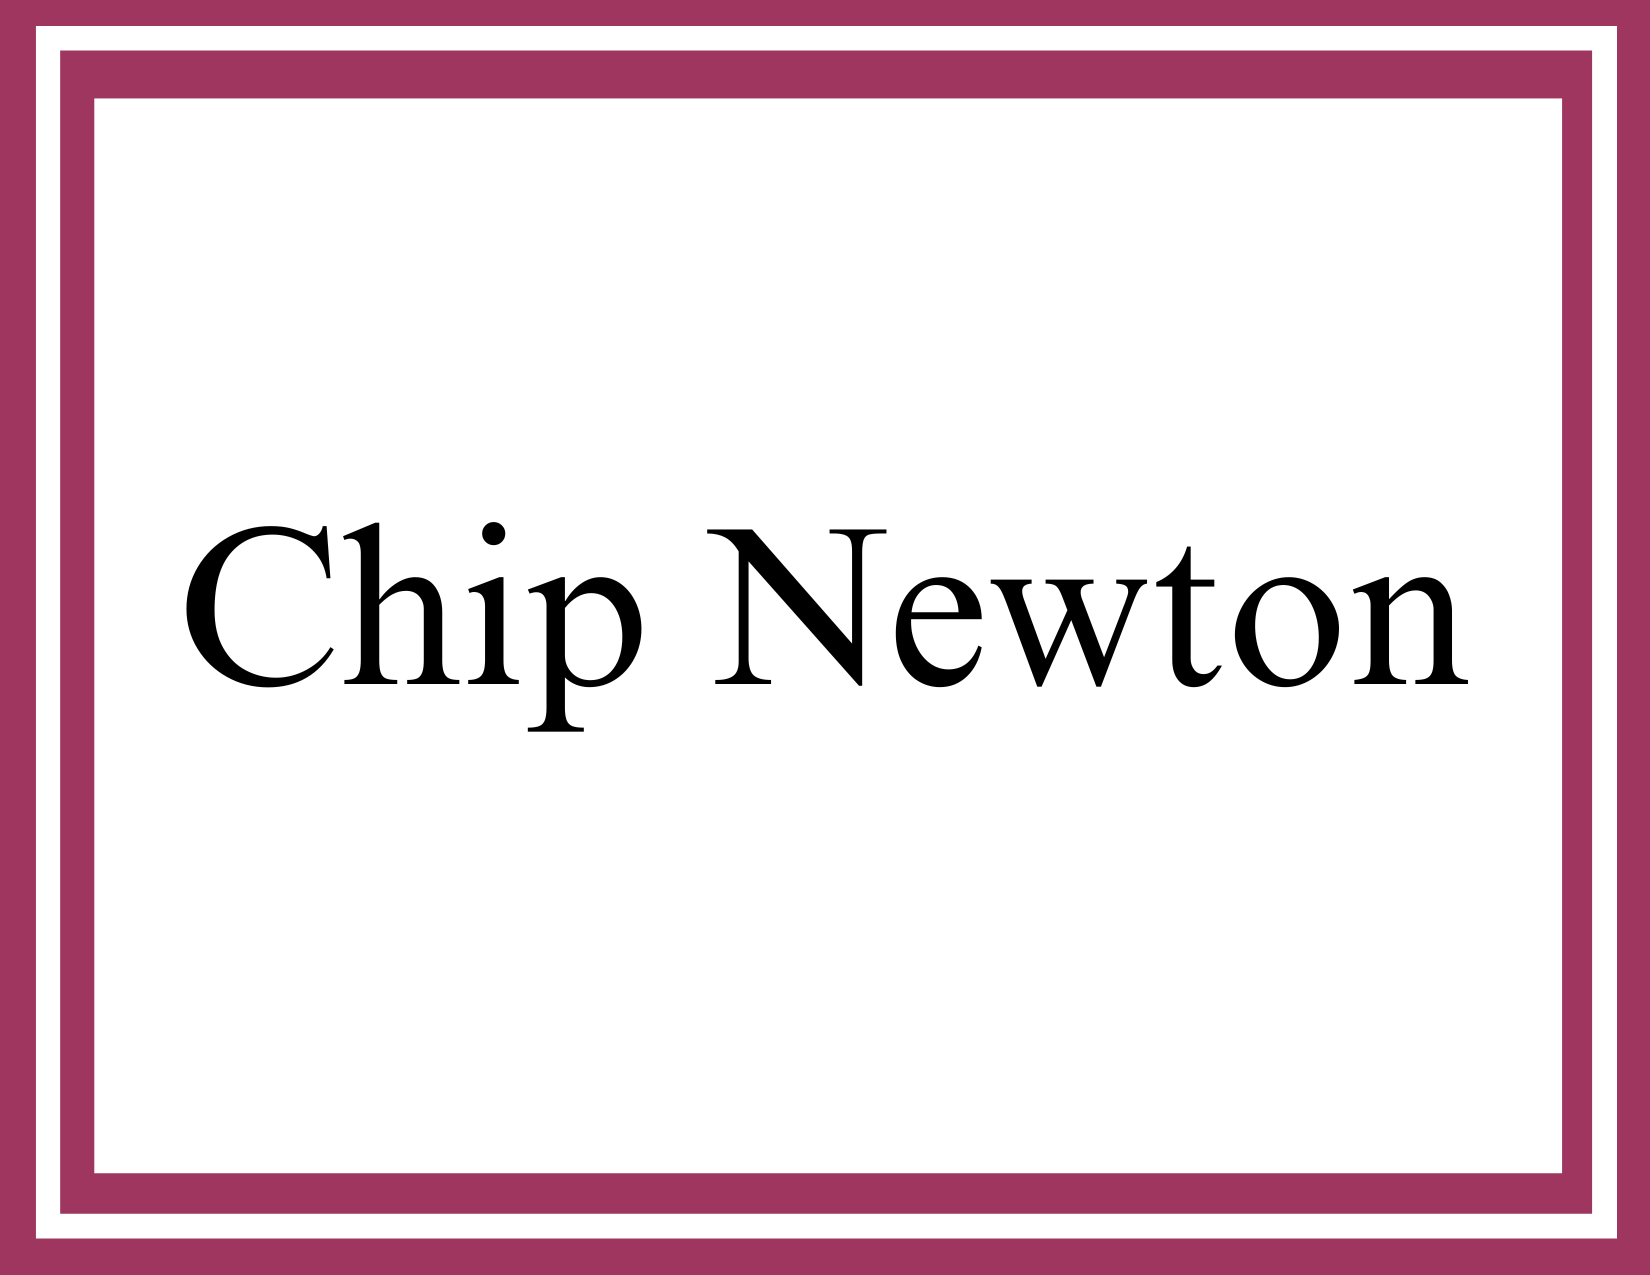 Chip Newton